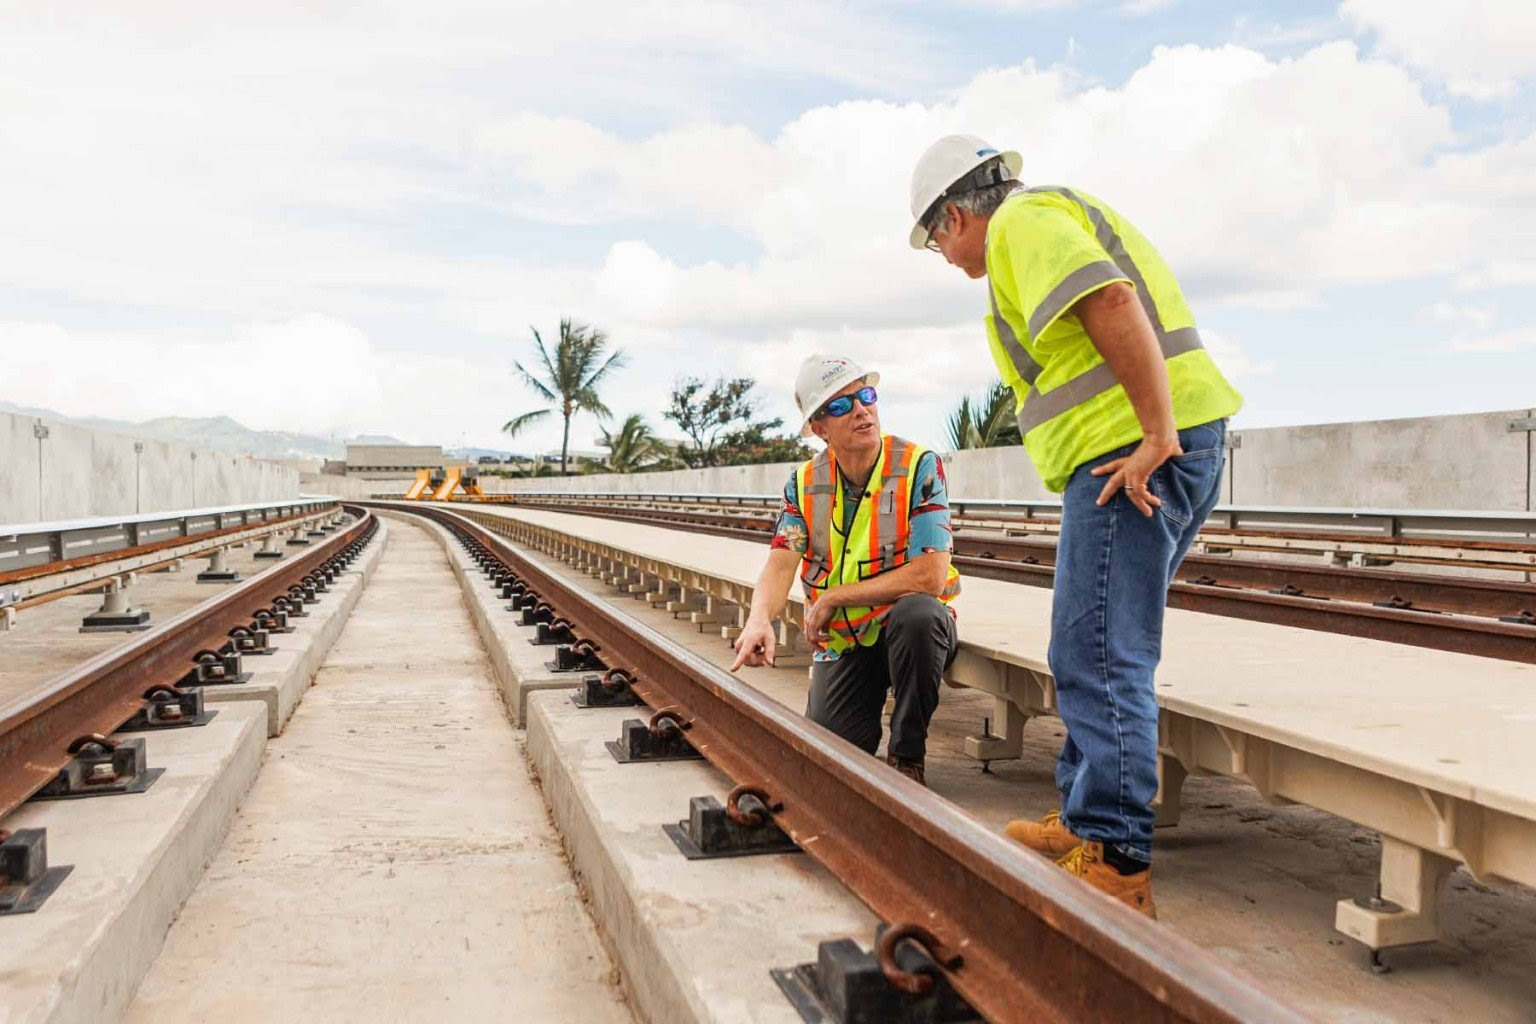 Meet Honolulu Rail’s Director of Design and Construction, Matthew Scanlon